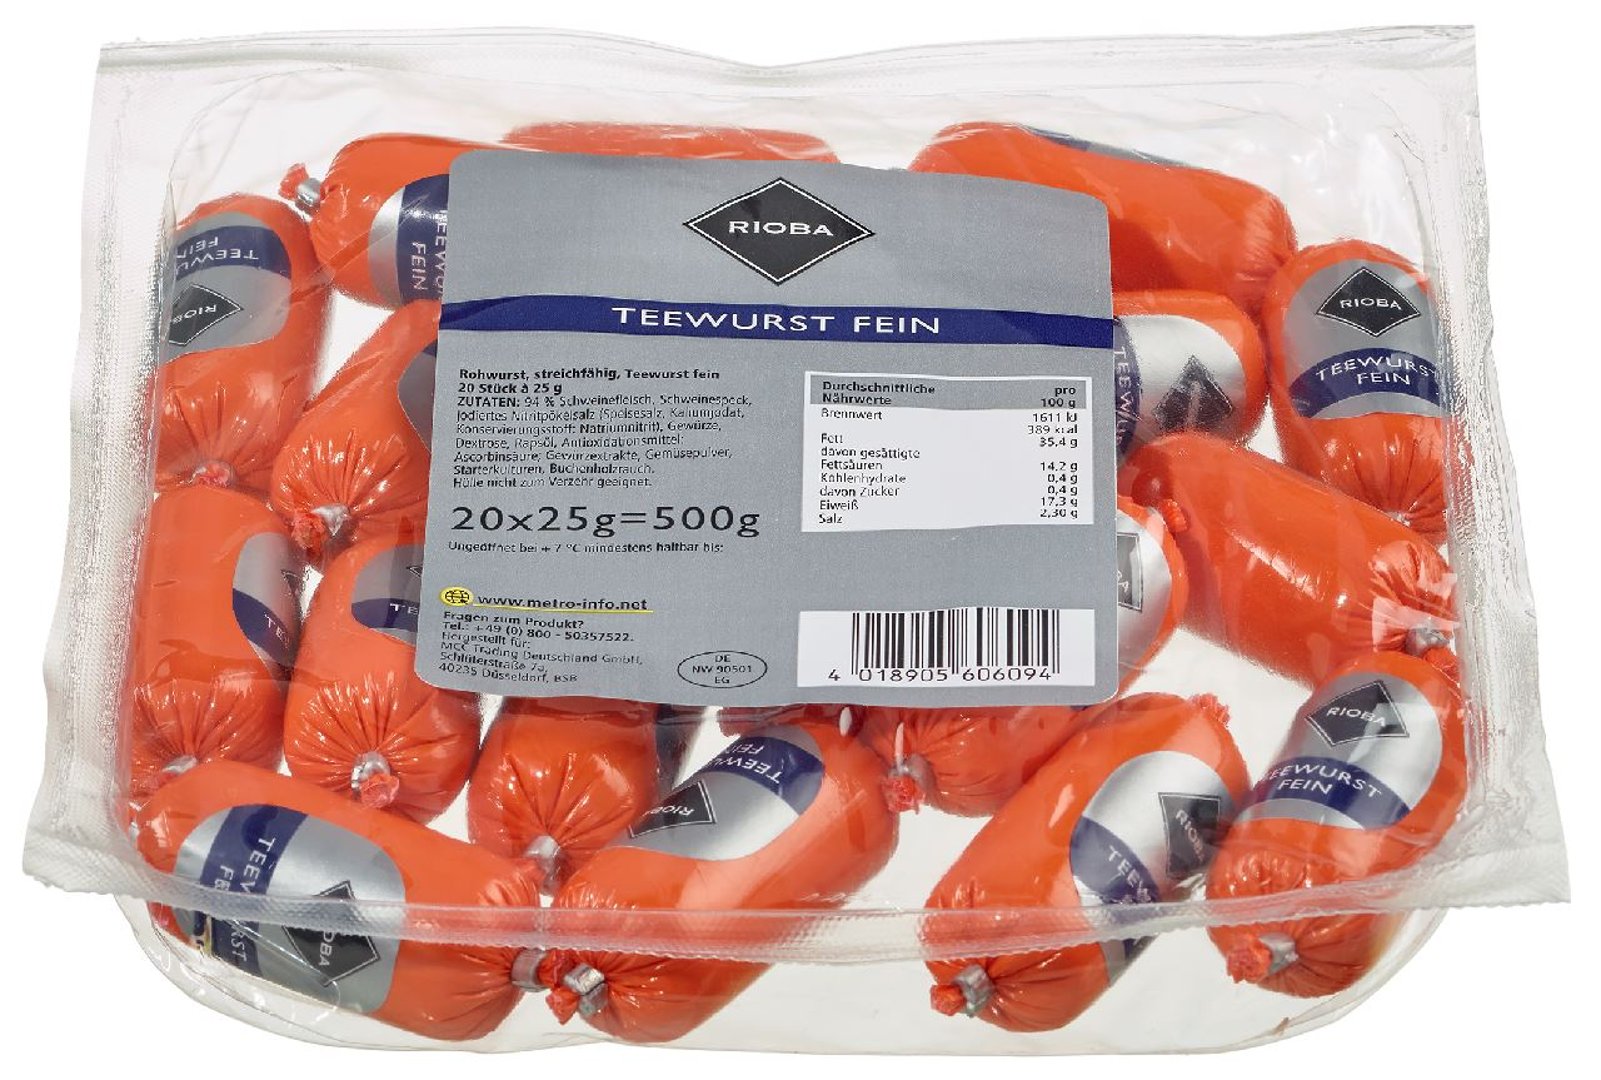 RIOBA - Teewurst fein, 20 Stück à 25 g - 500 g Packung